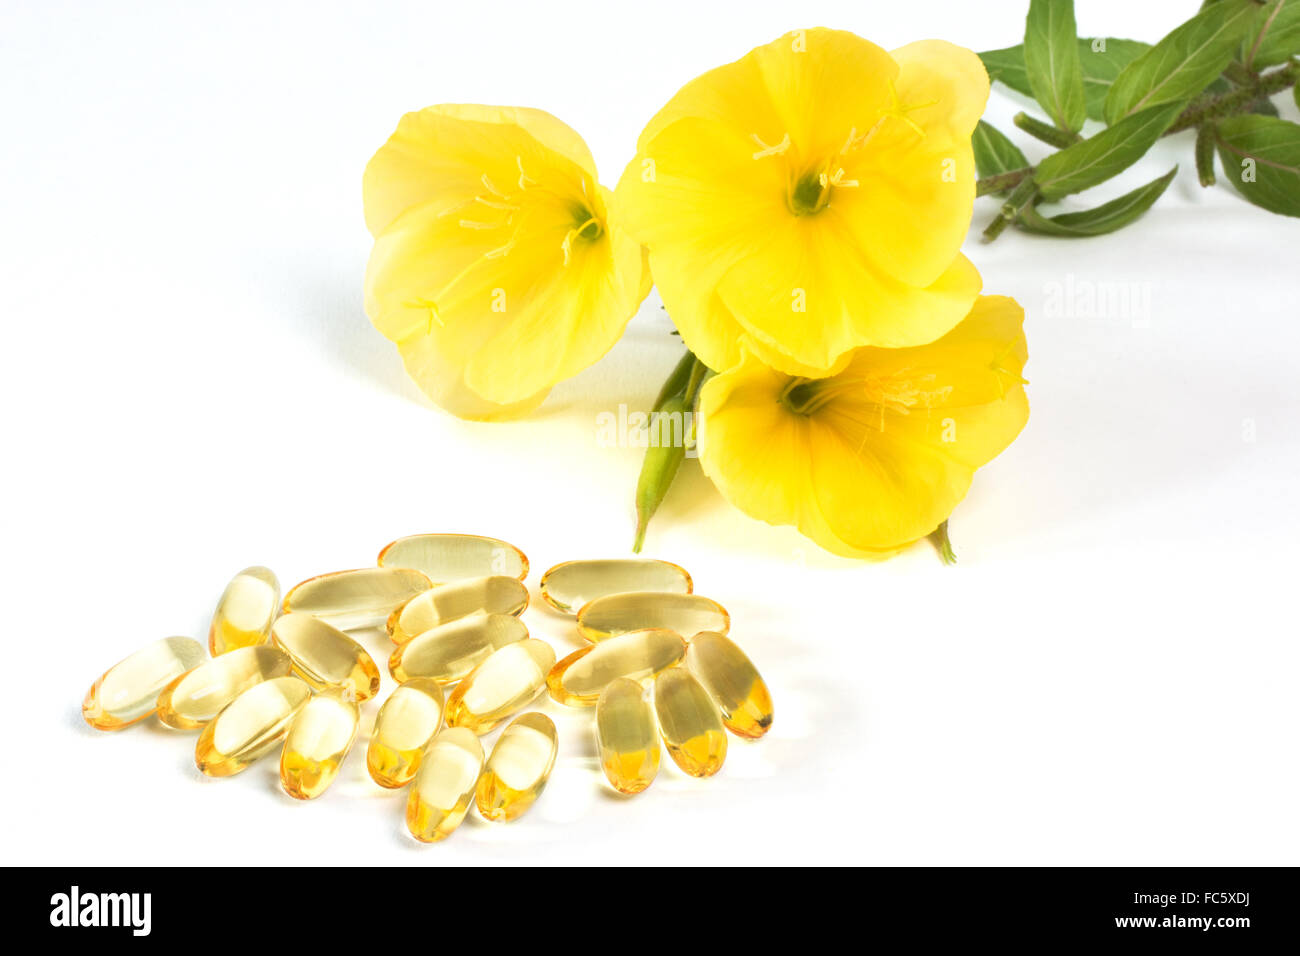 Evening primroses with gelatin capsules Stock Photo